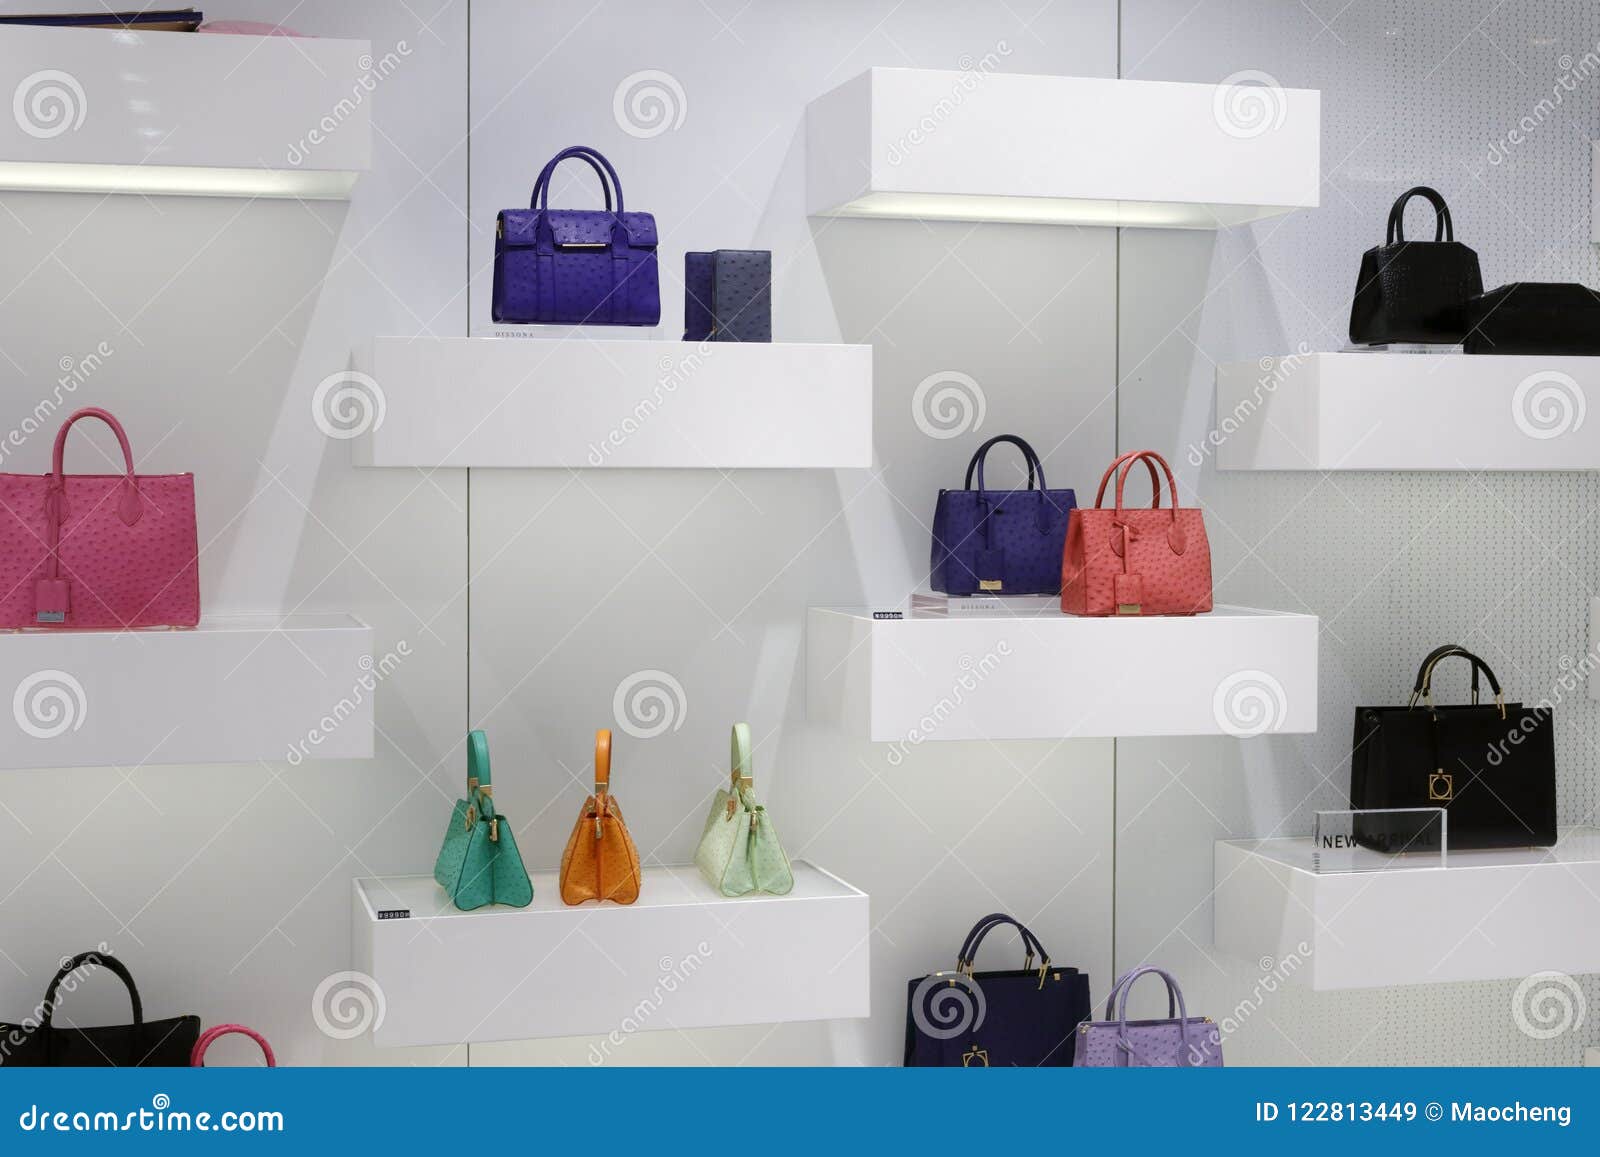 China Luxury Handbag Brand Dissona, Adobe Rgb Editorial Stock